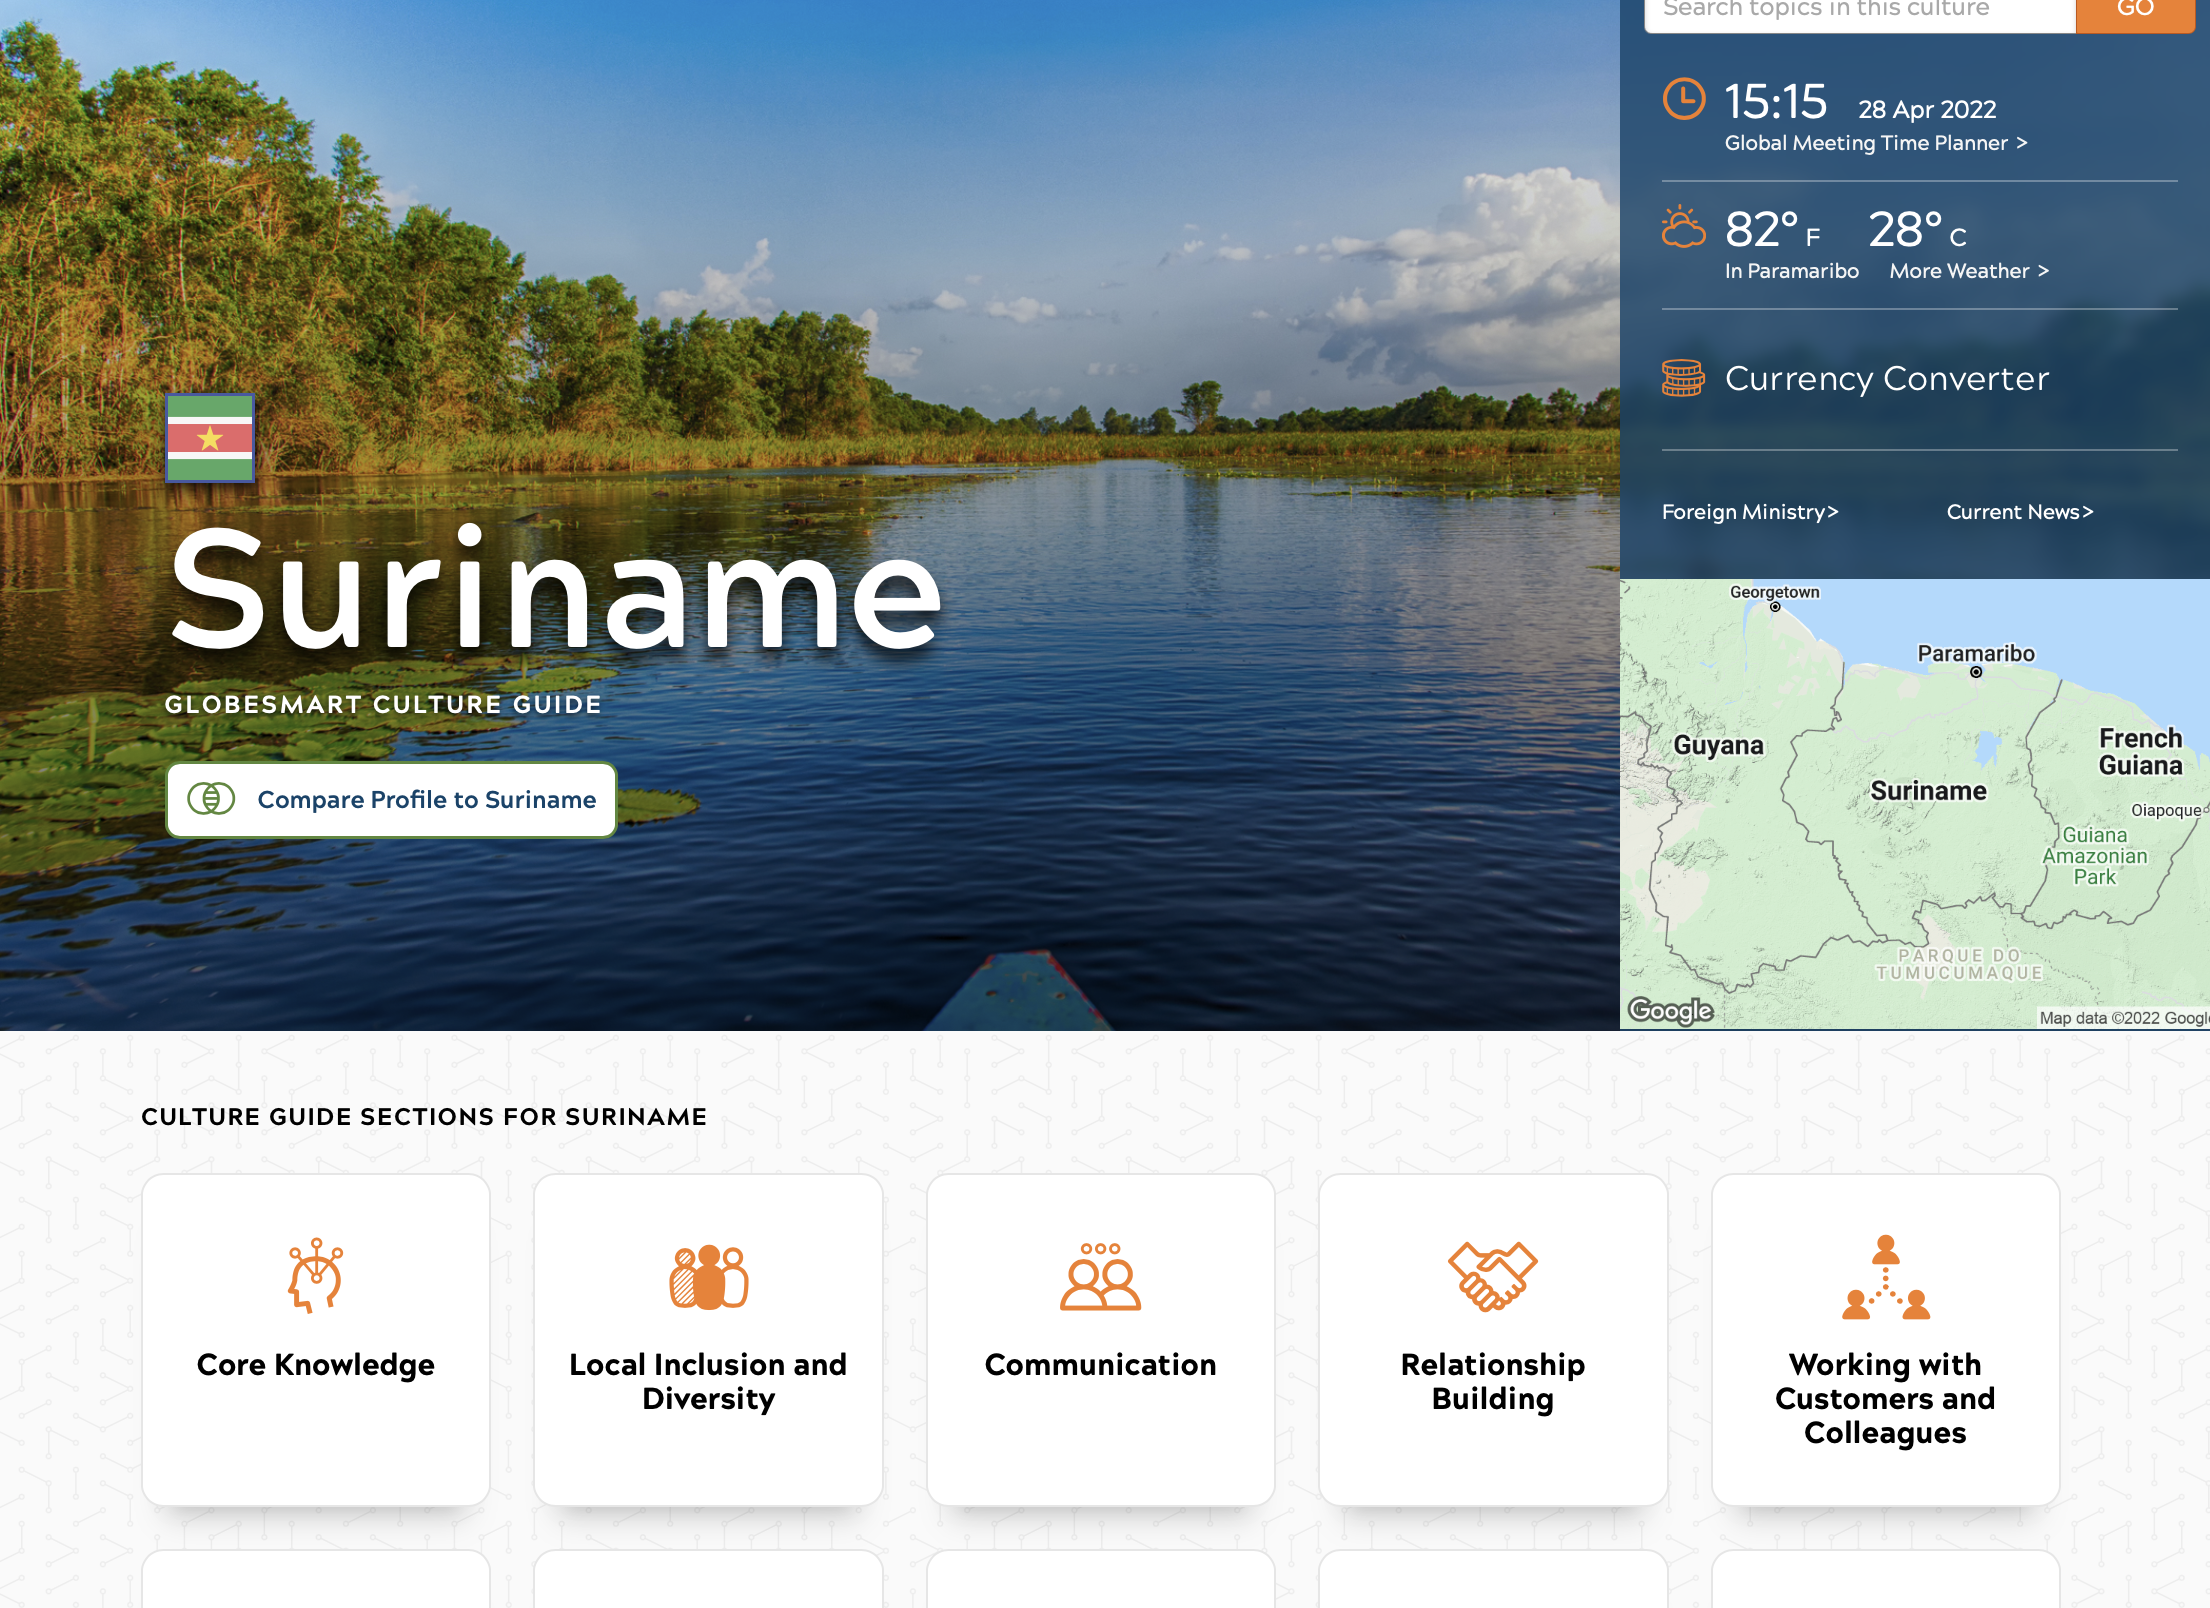 Suriname in GlobeSmart